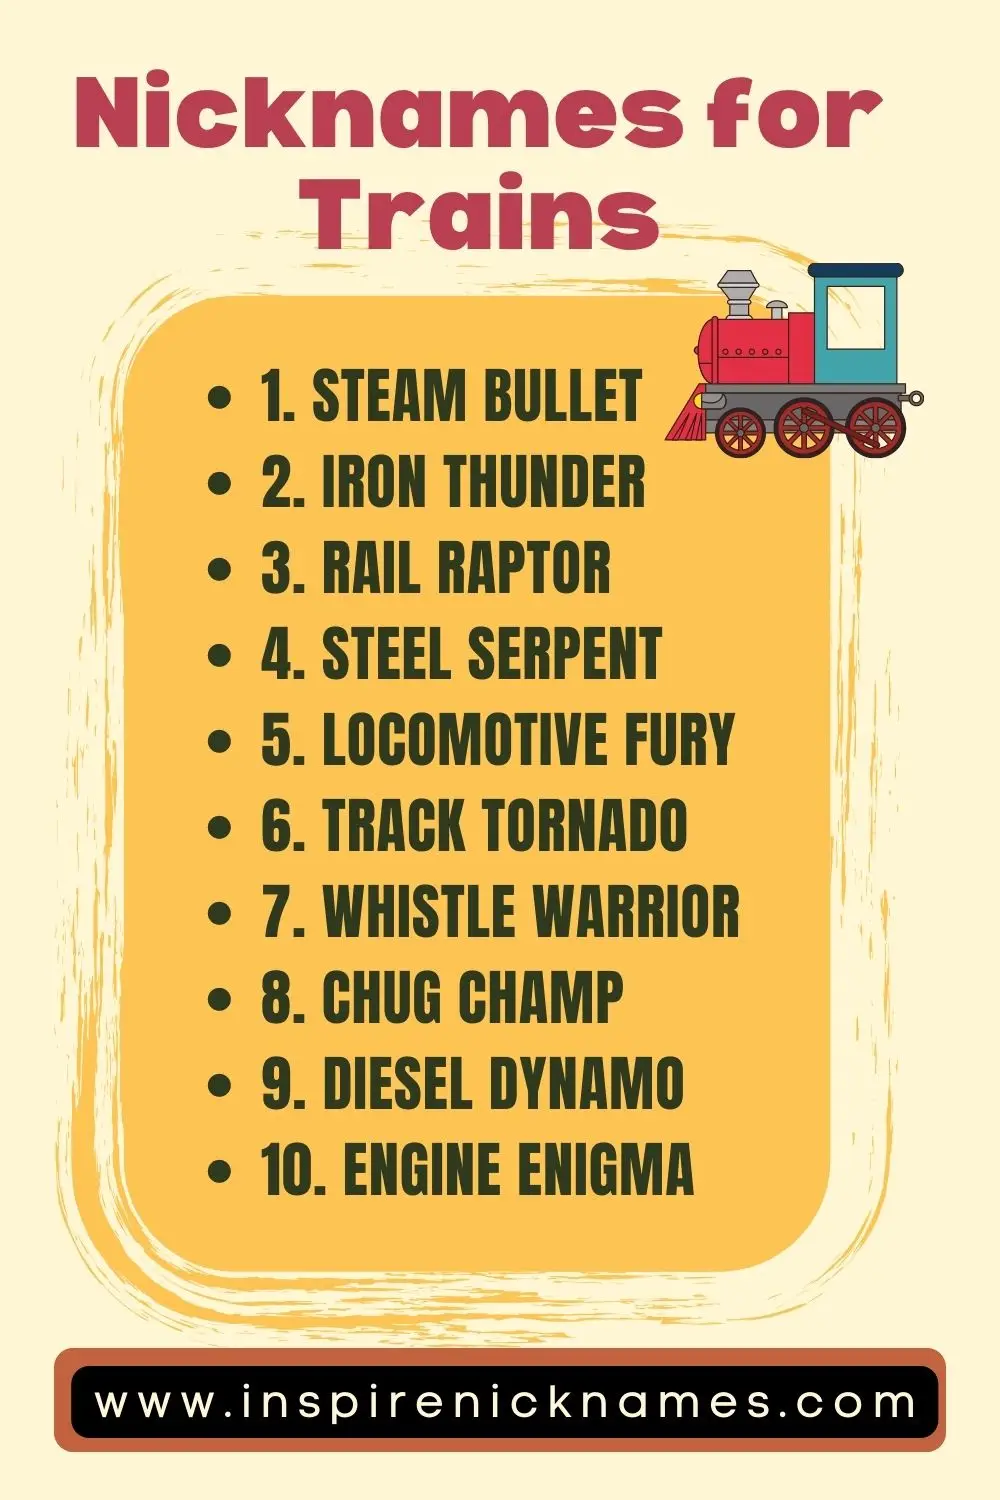 nicknames for trains list ideas